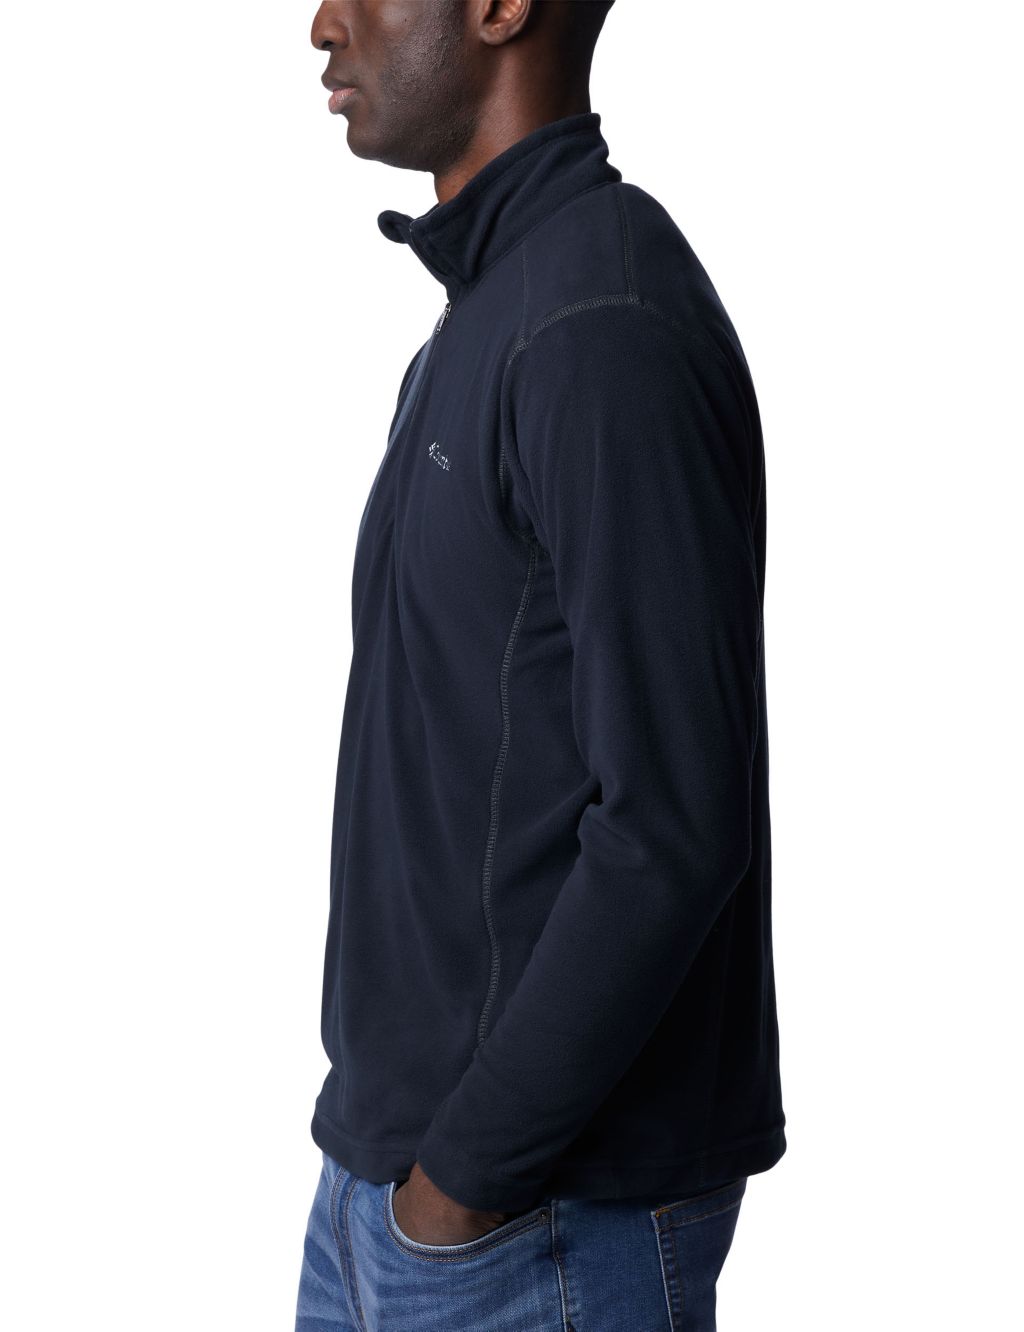 Men's Klamath Range™ Full Zip Fleece Jacket